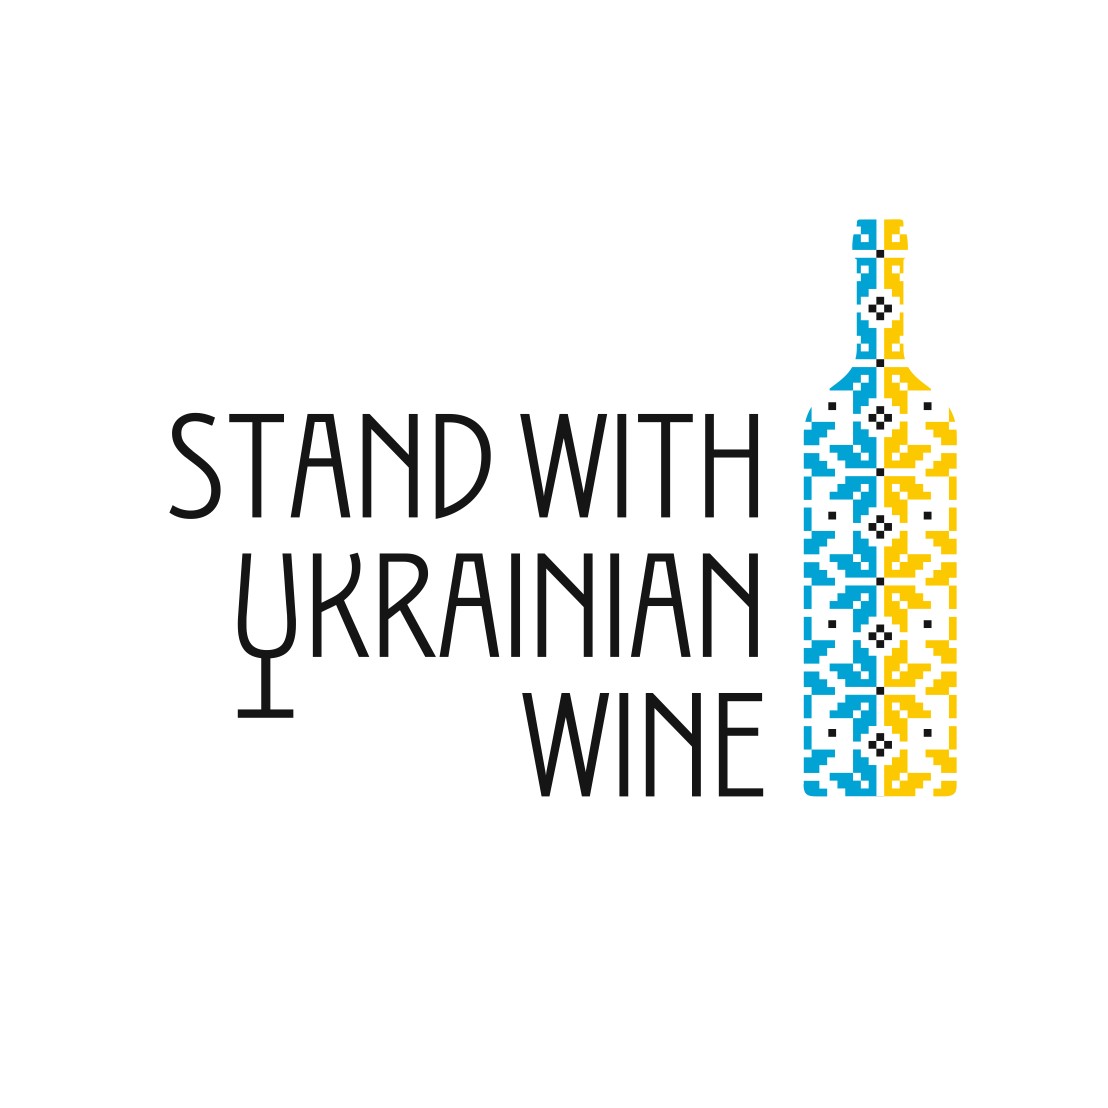 Ukrainian Wine logo design by logo designer Kovalen.com for your inspiration and for the worlds largest logo competition